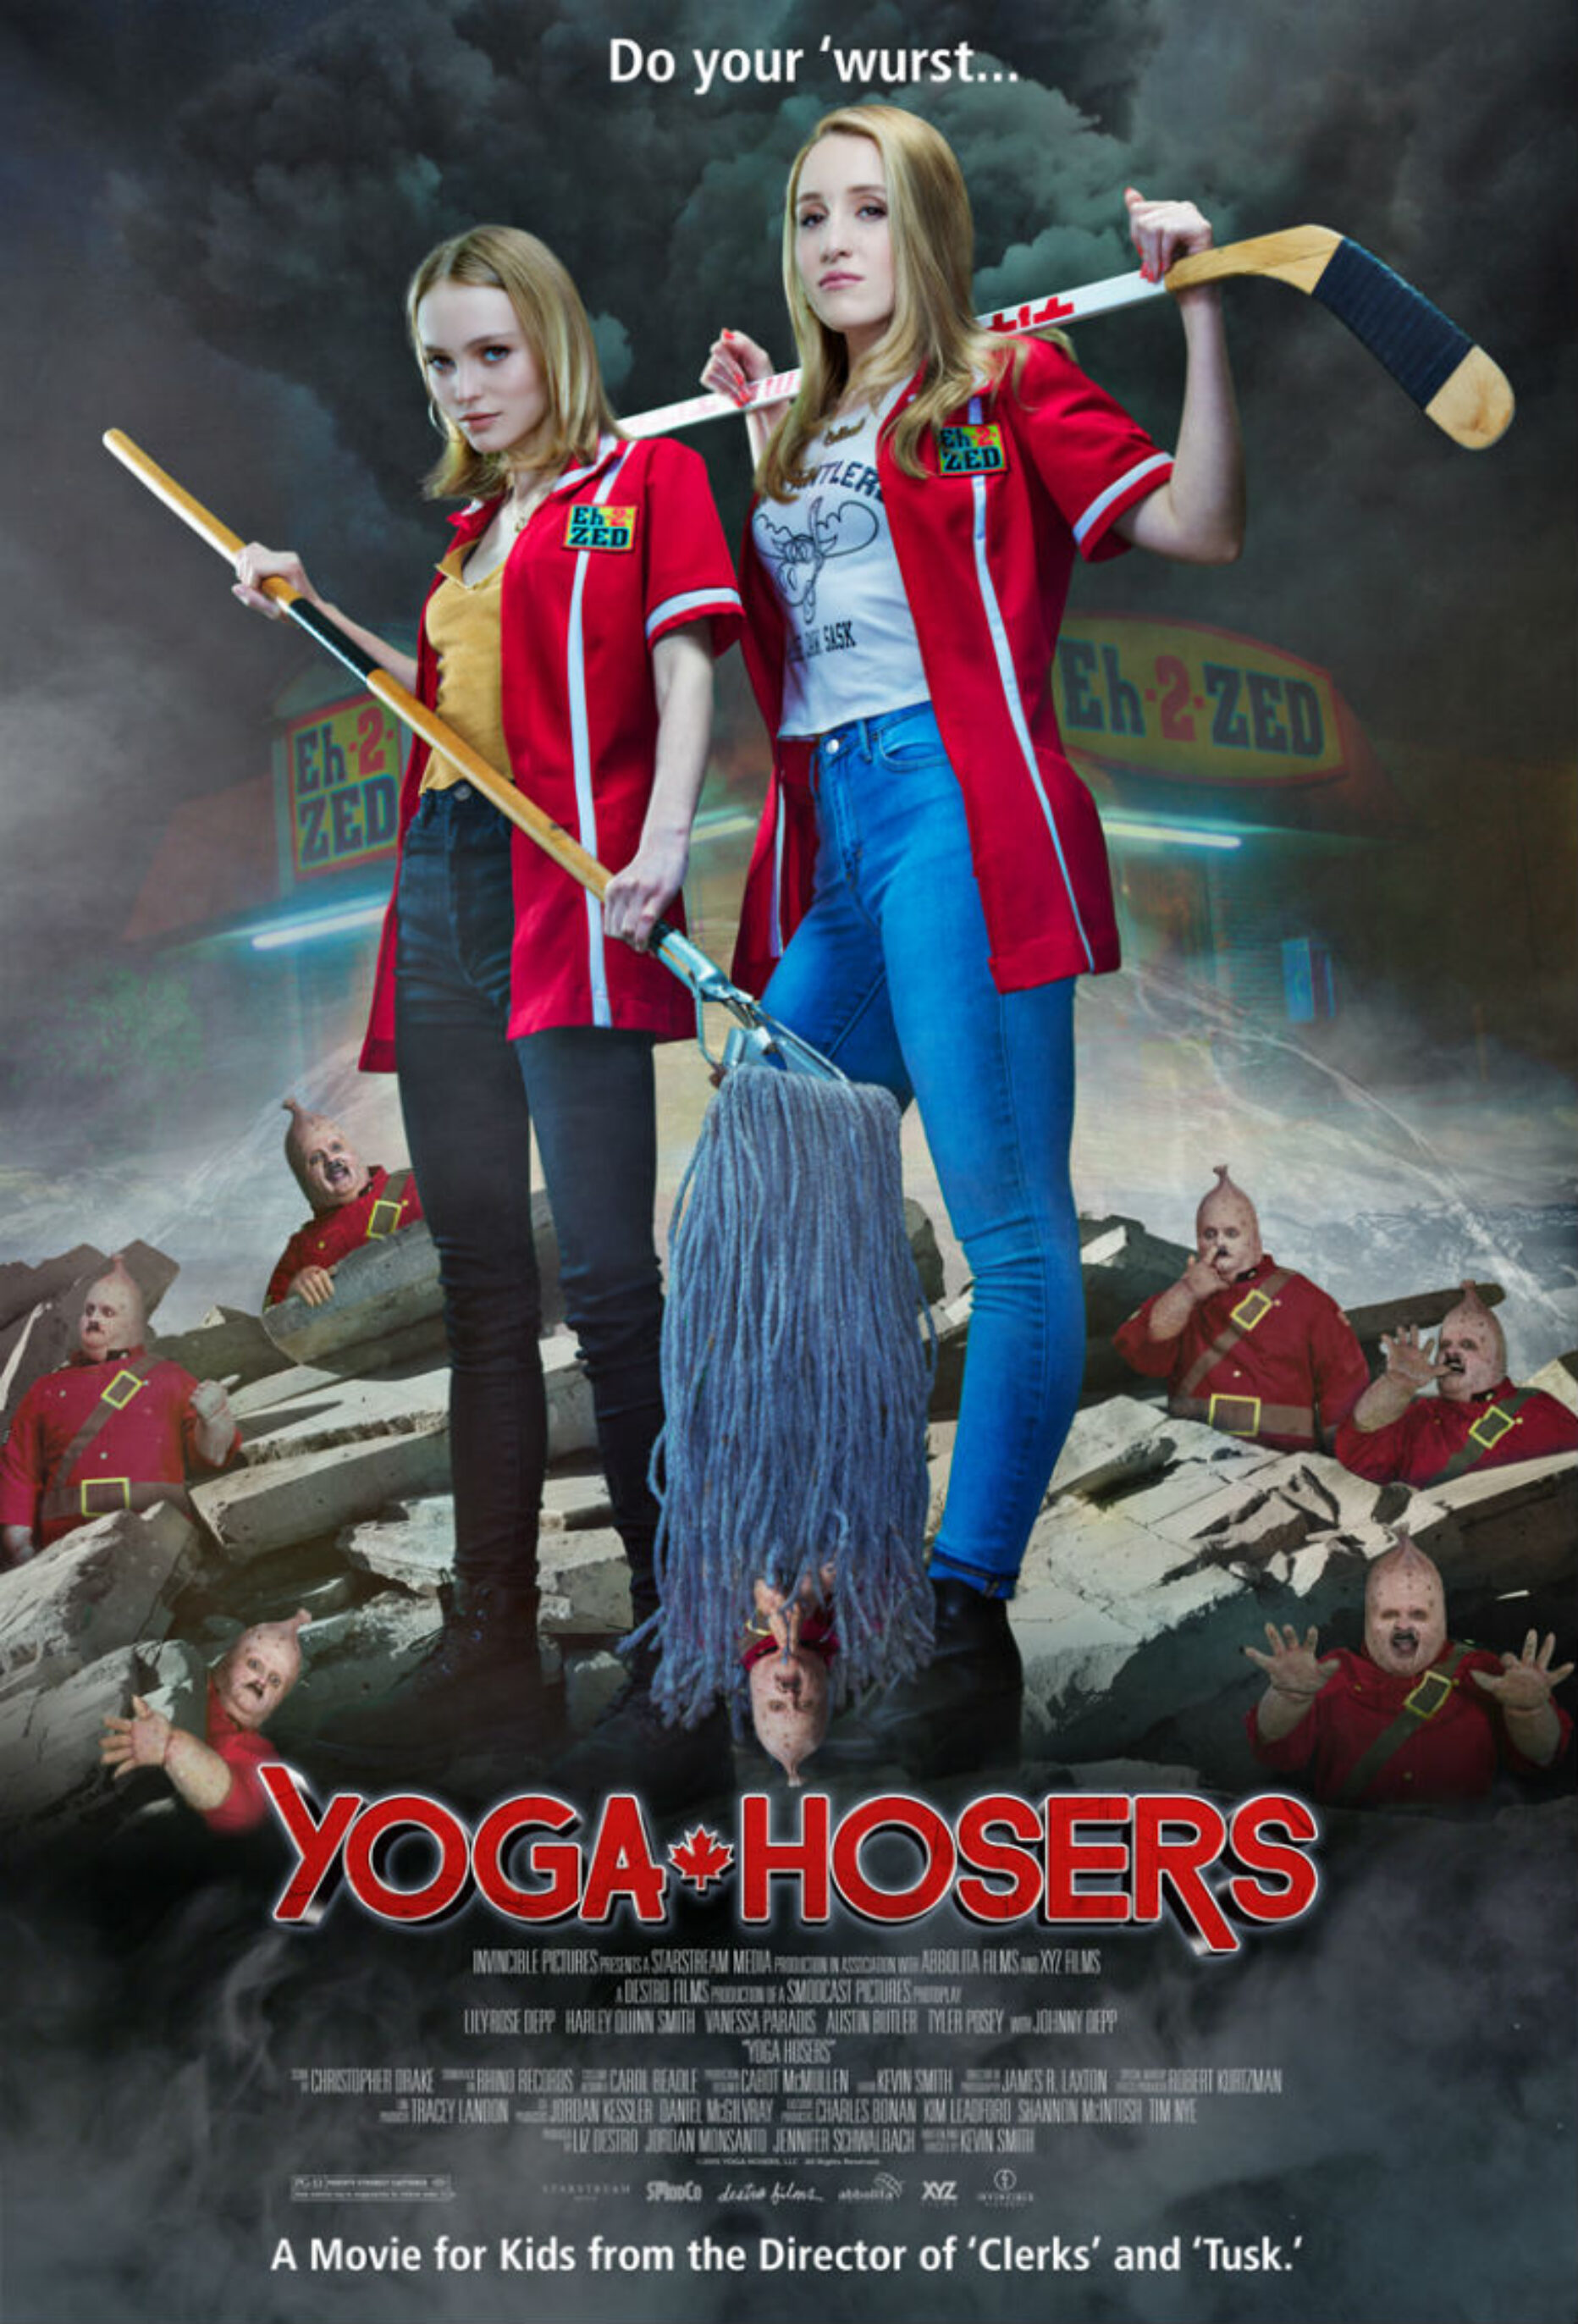 Tuesday Trailer #51: Yoga Hosers